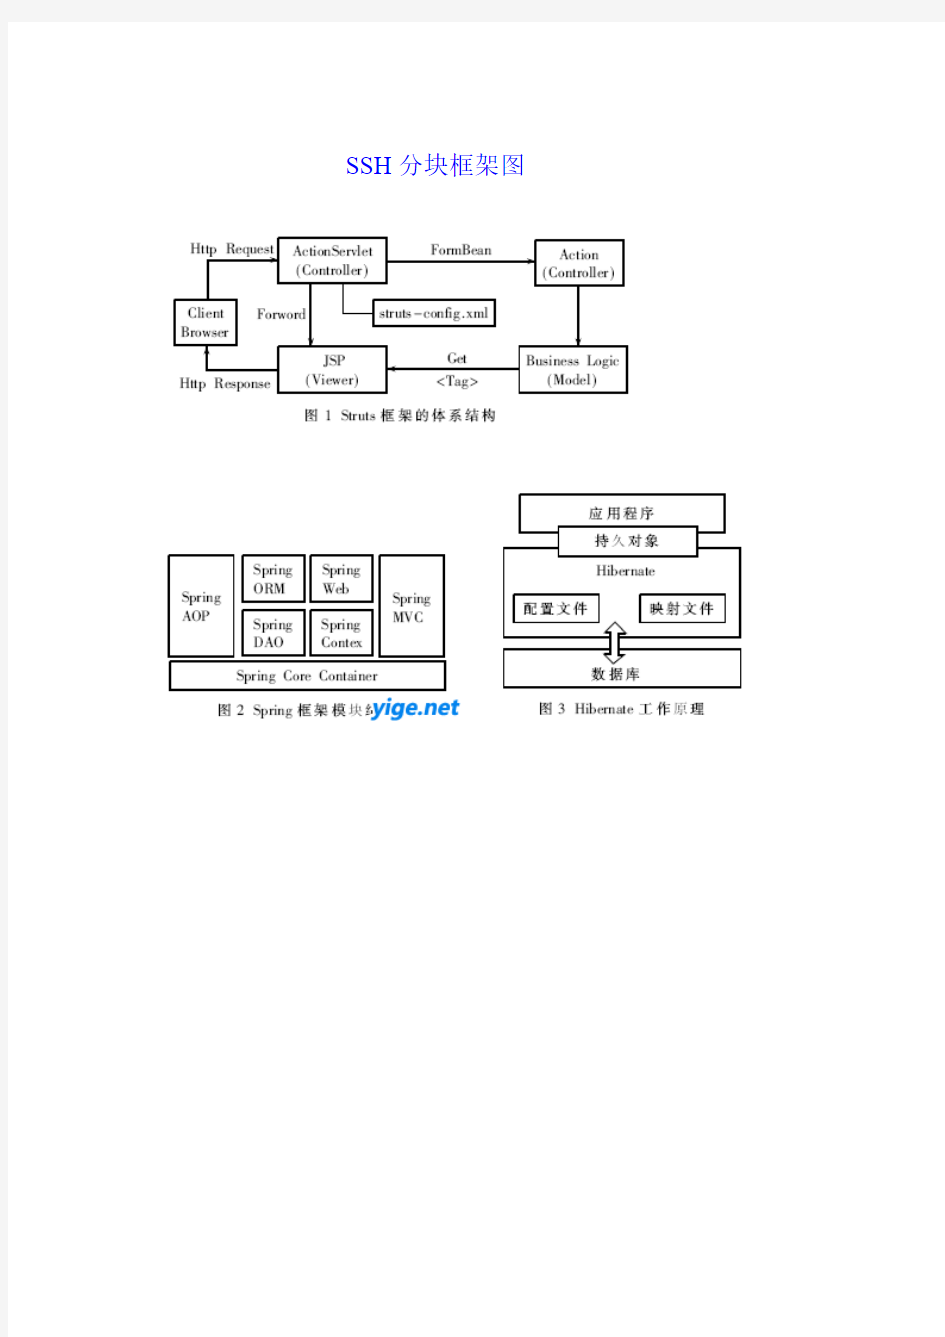 SSH框架图